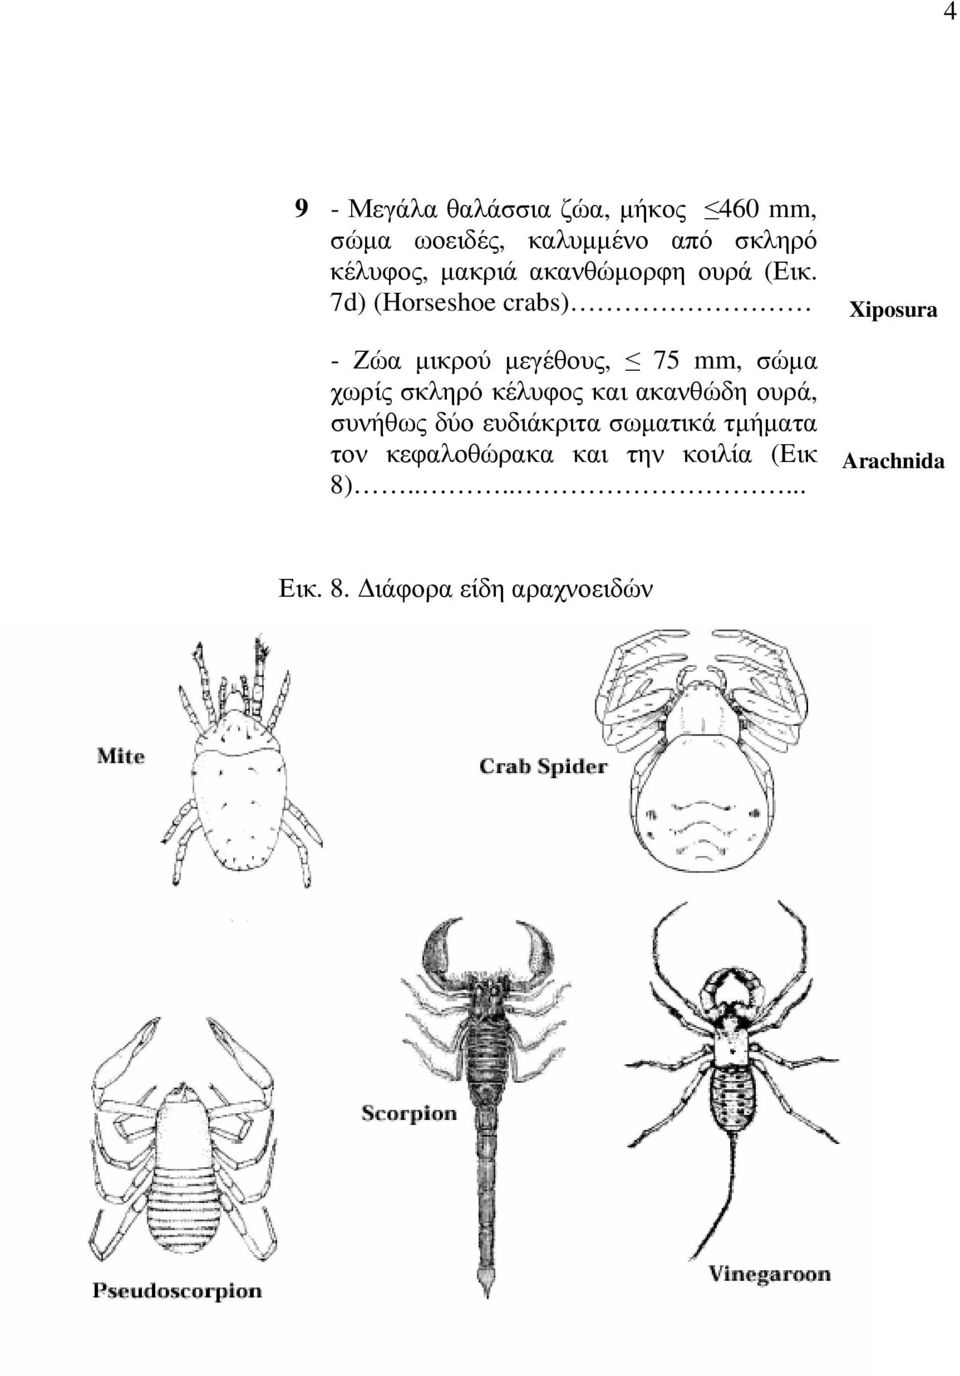 7d) (Horseshoe crabs) Xiposura - Ζώα μικρού μεγέθους, 75 mm, σώμα χωρίς σκληρό κέλυφος